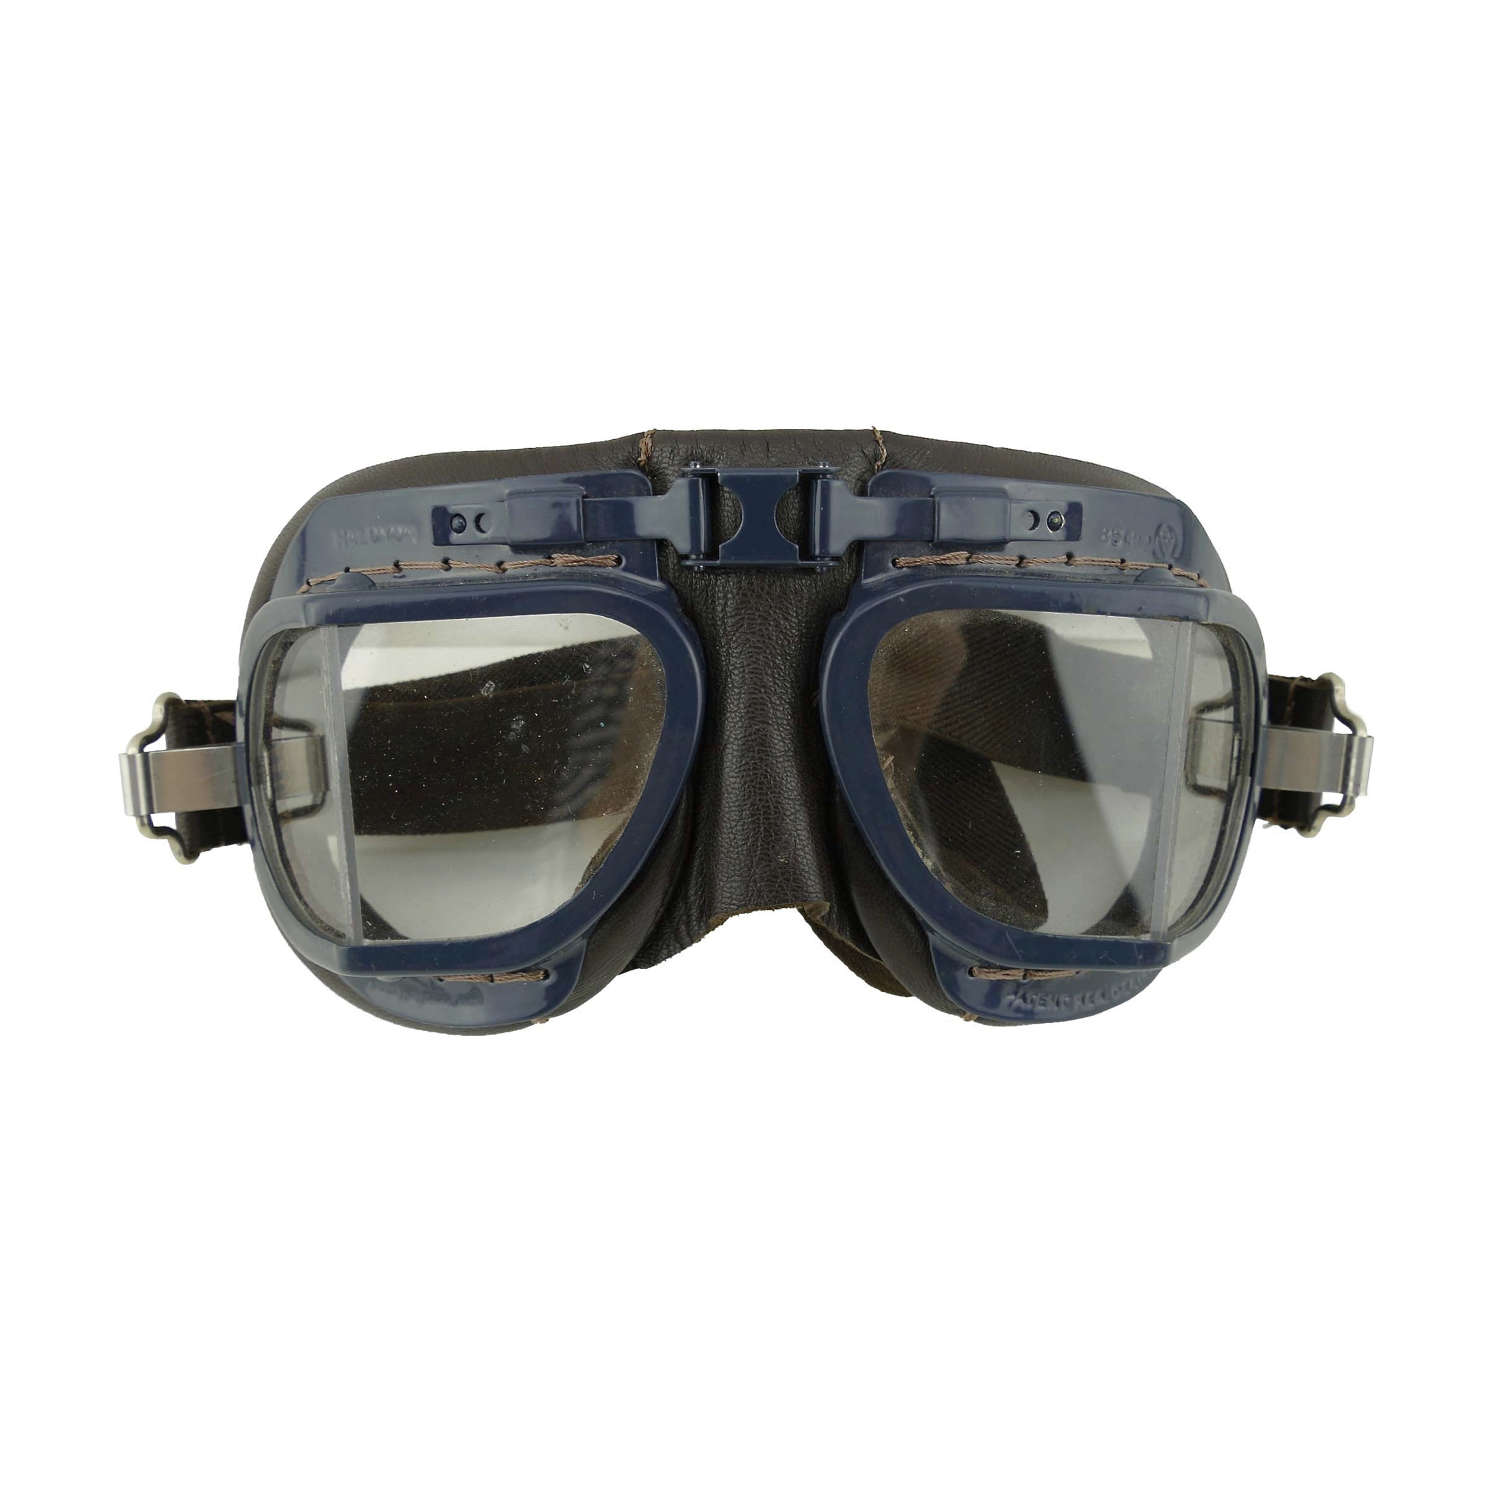 Halcyon MK.VIII goggles